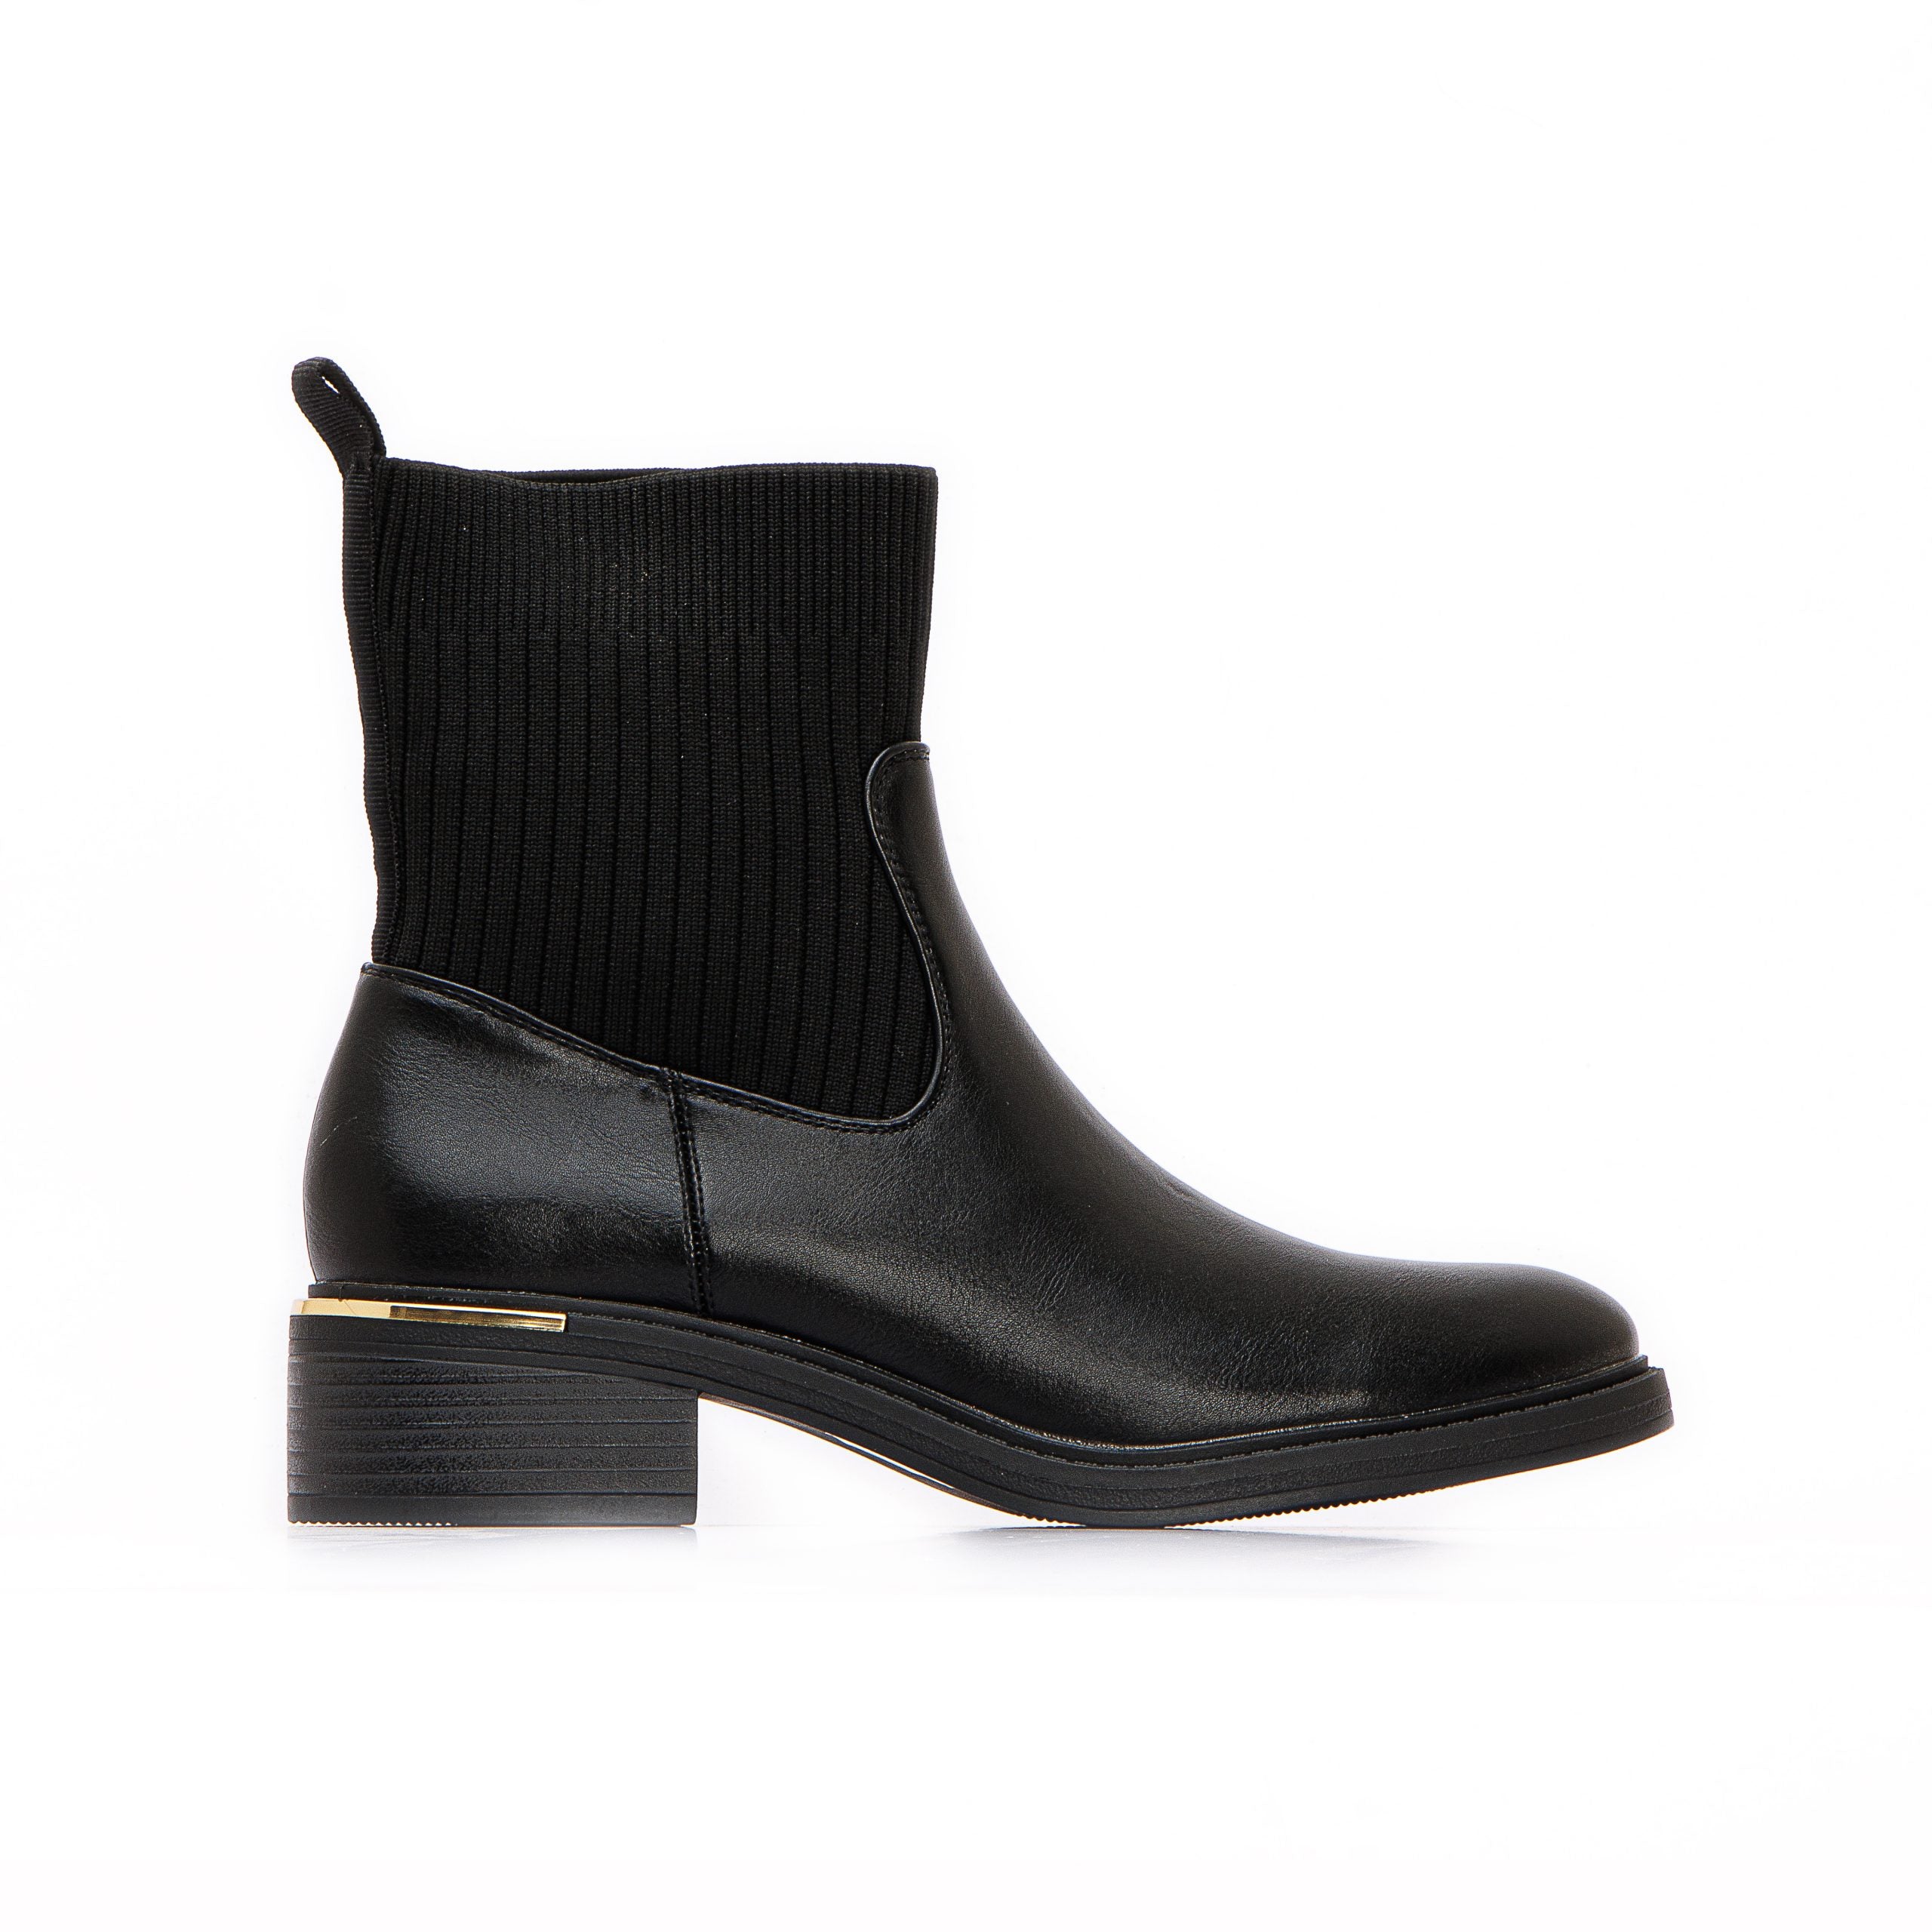 Shoeroom Half Boot Leather For Women 2937